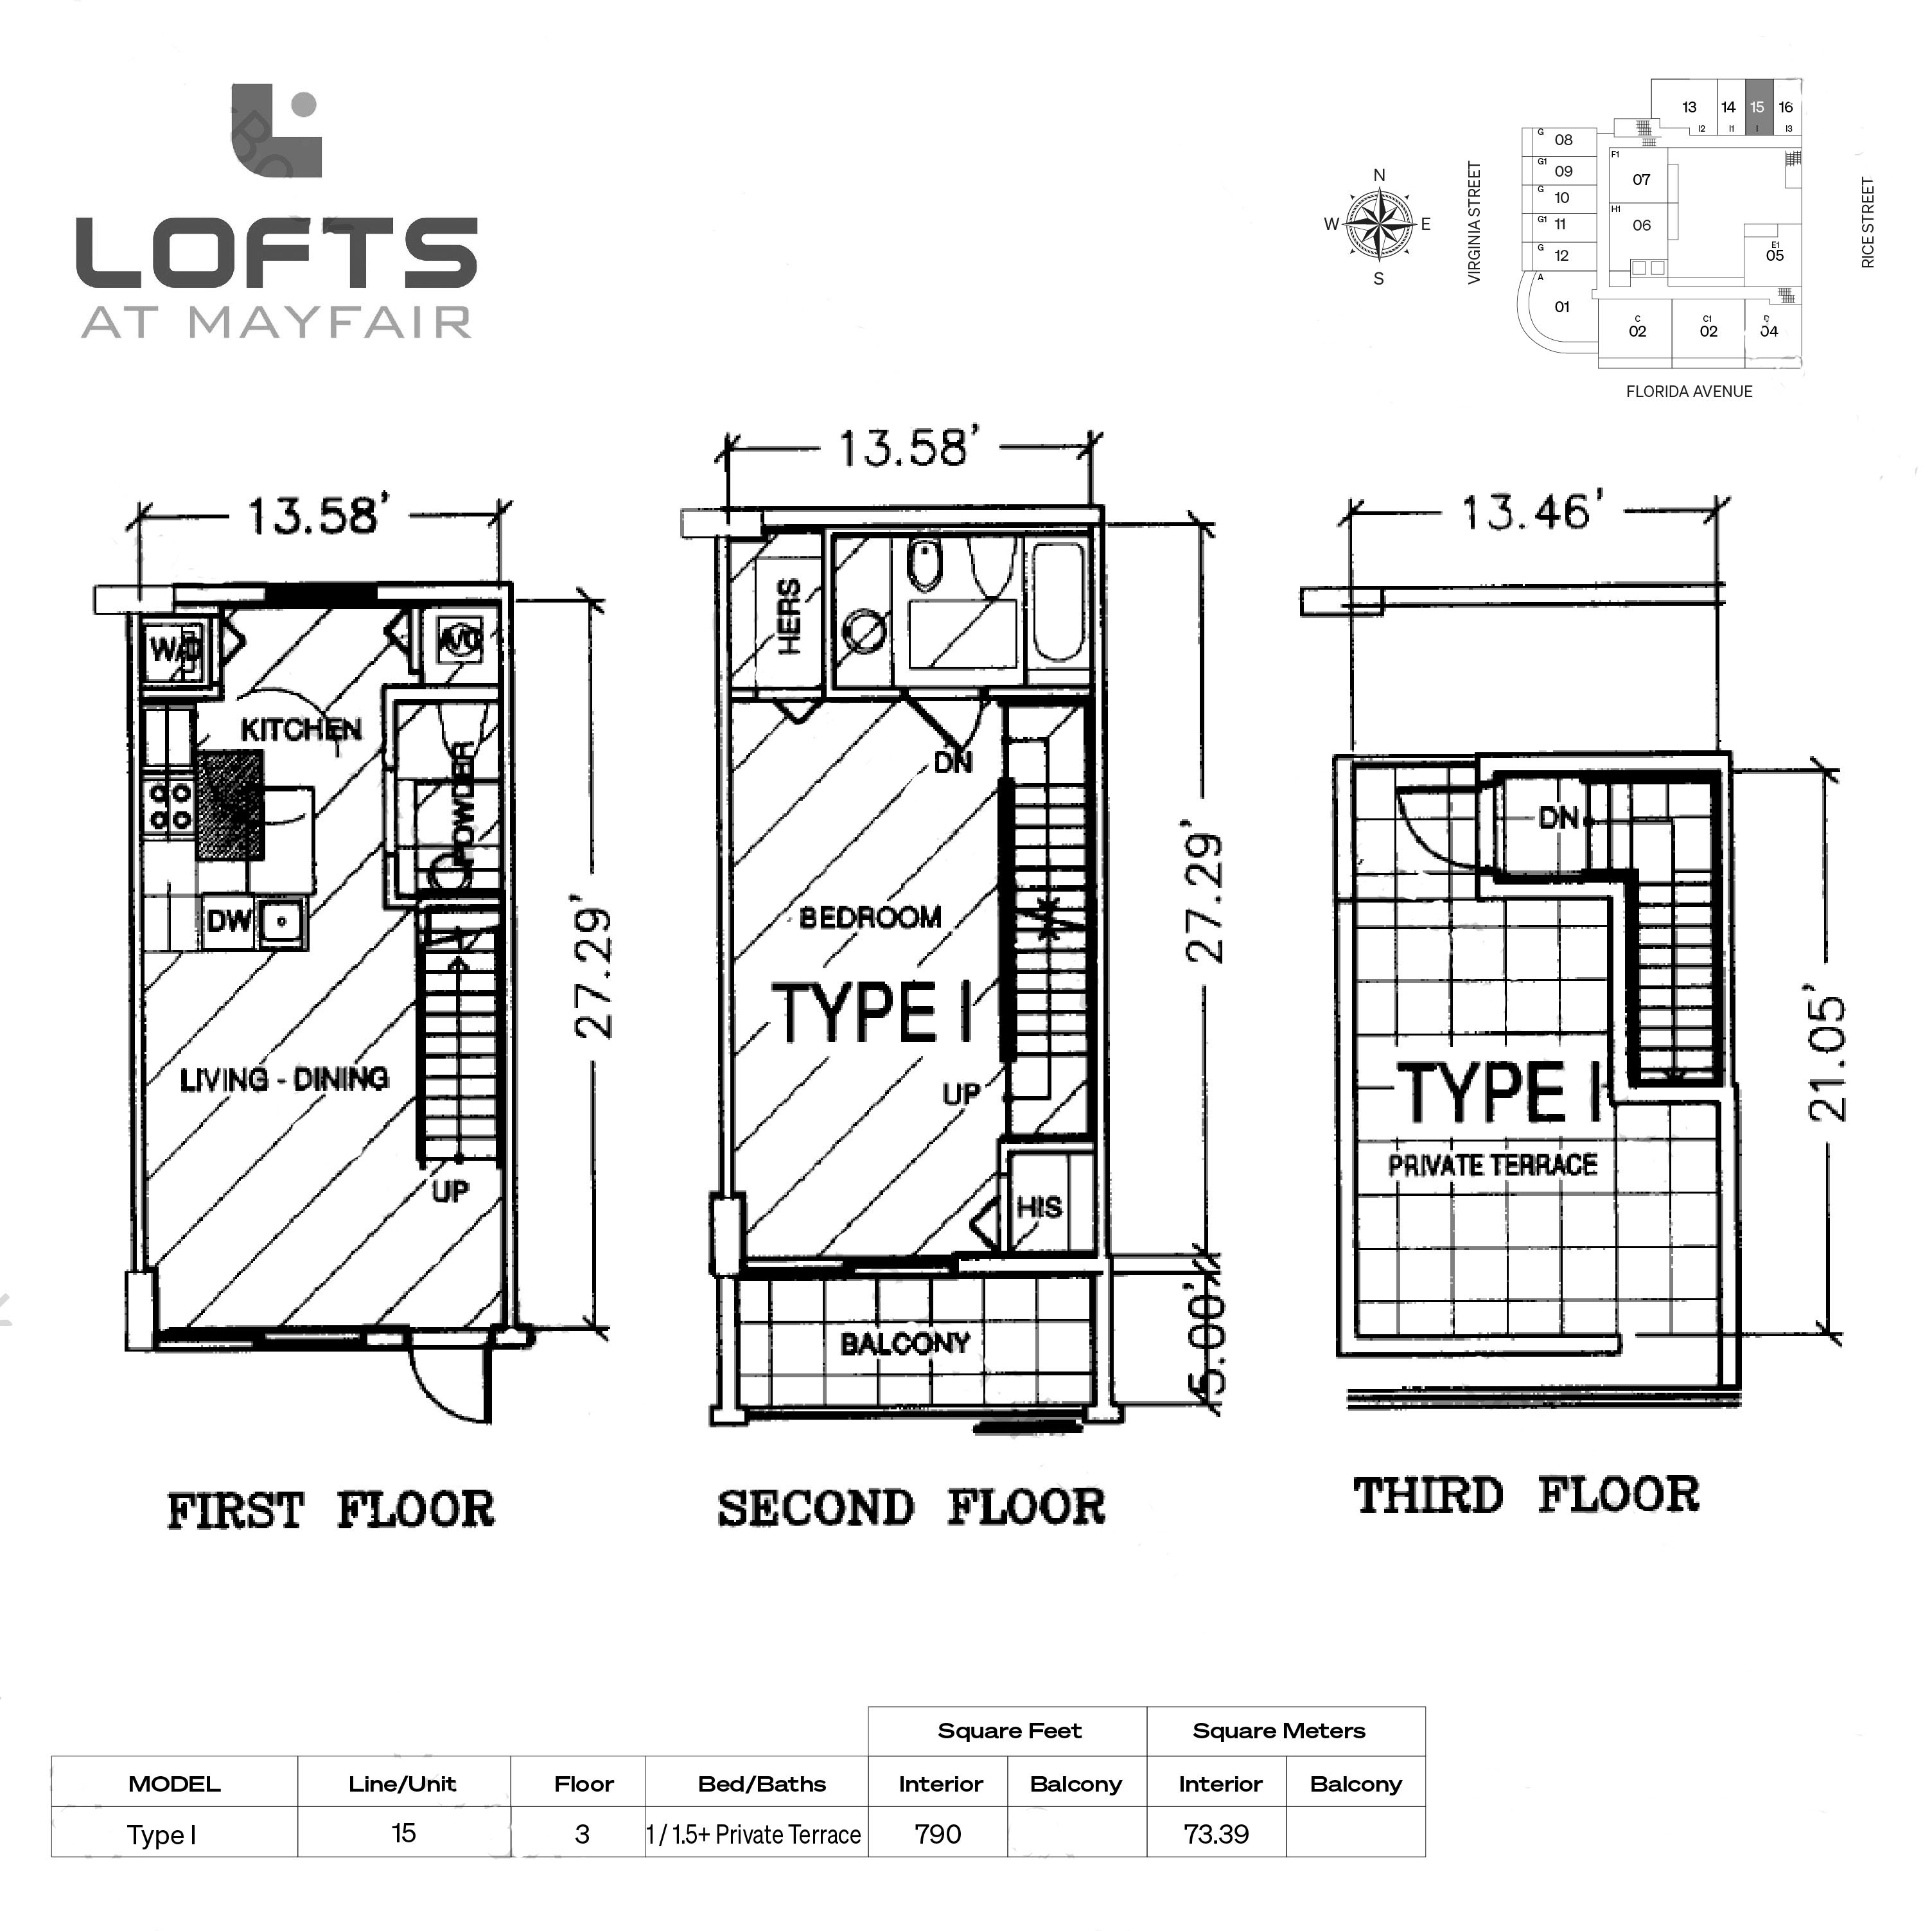 Lofts at Mayfair Type I